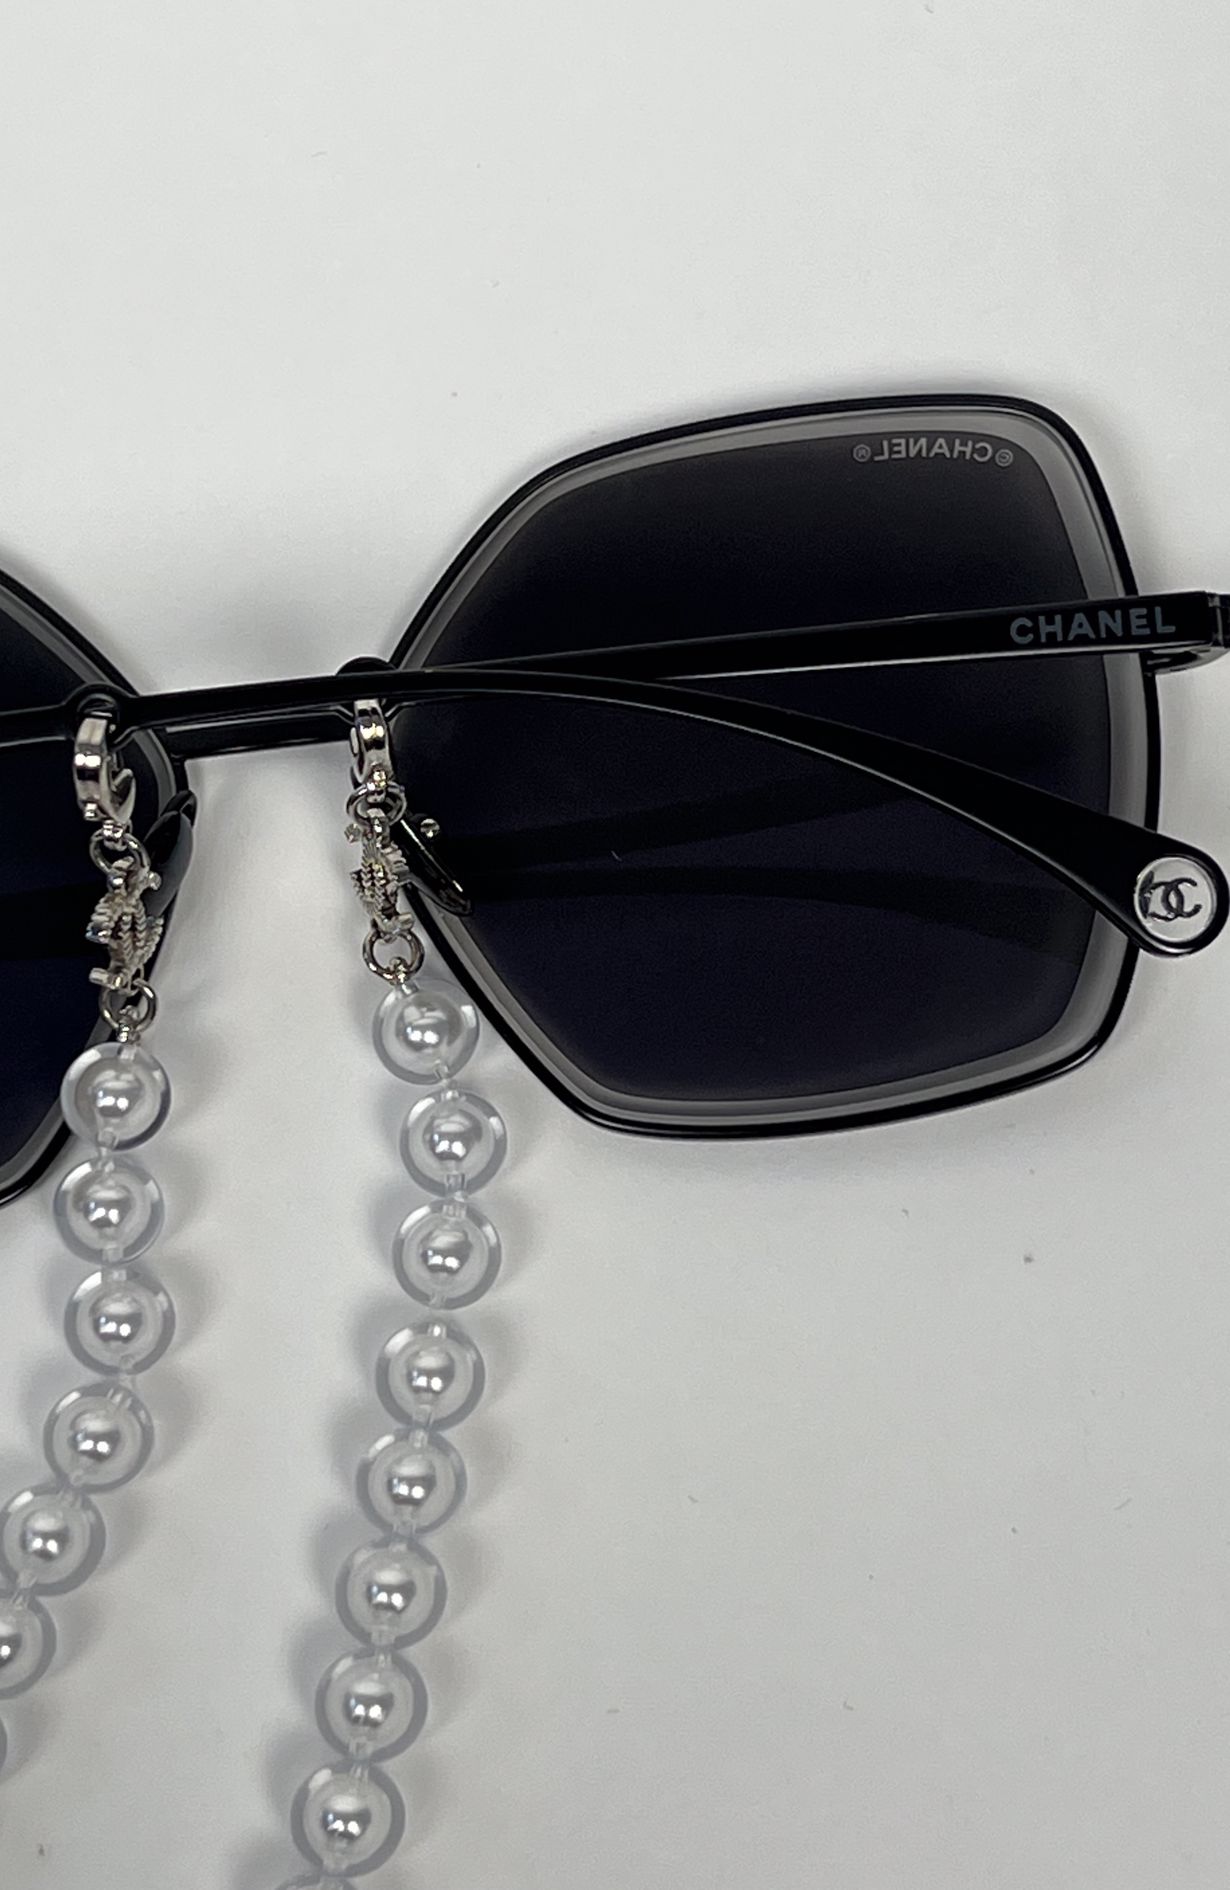 Chanel sunglasses incl chain and box